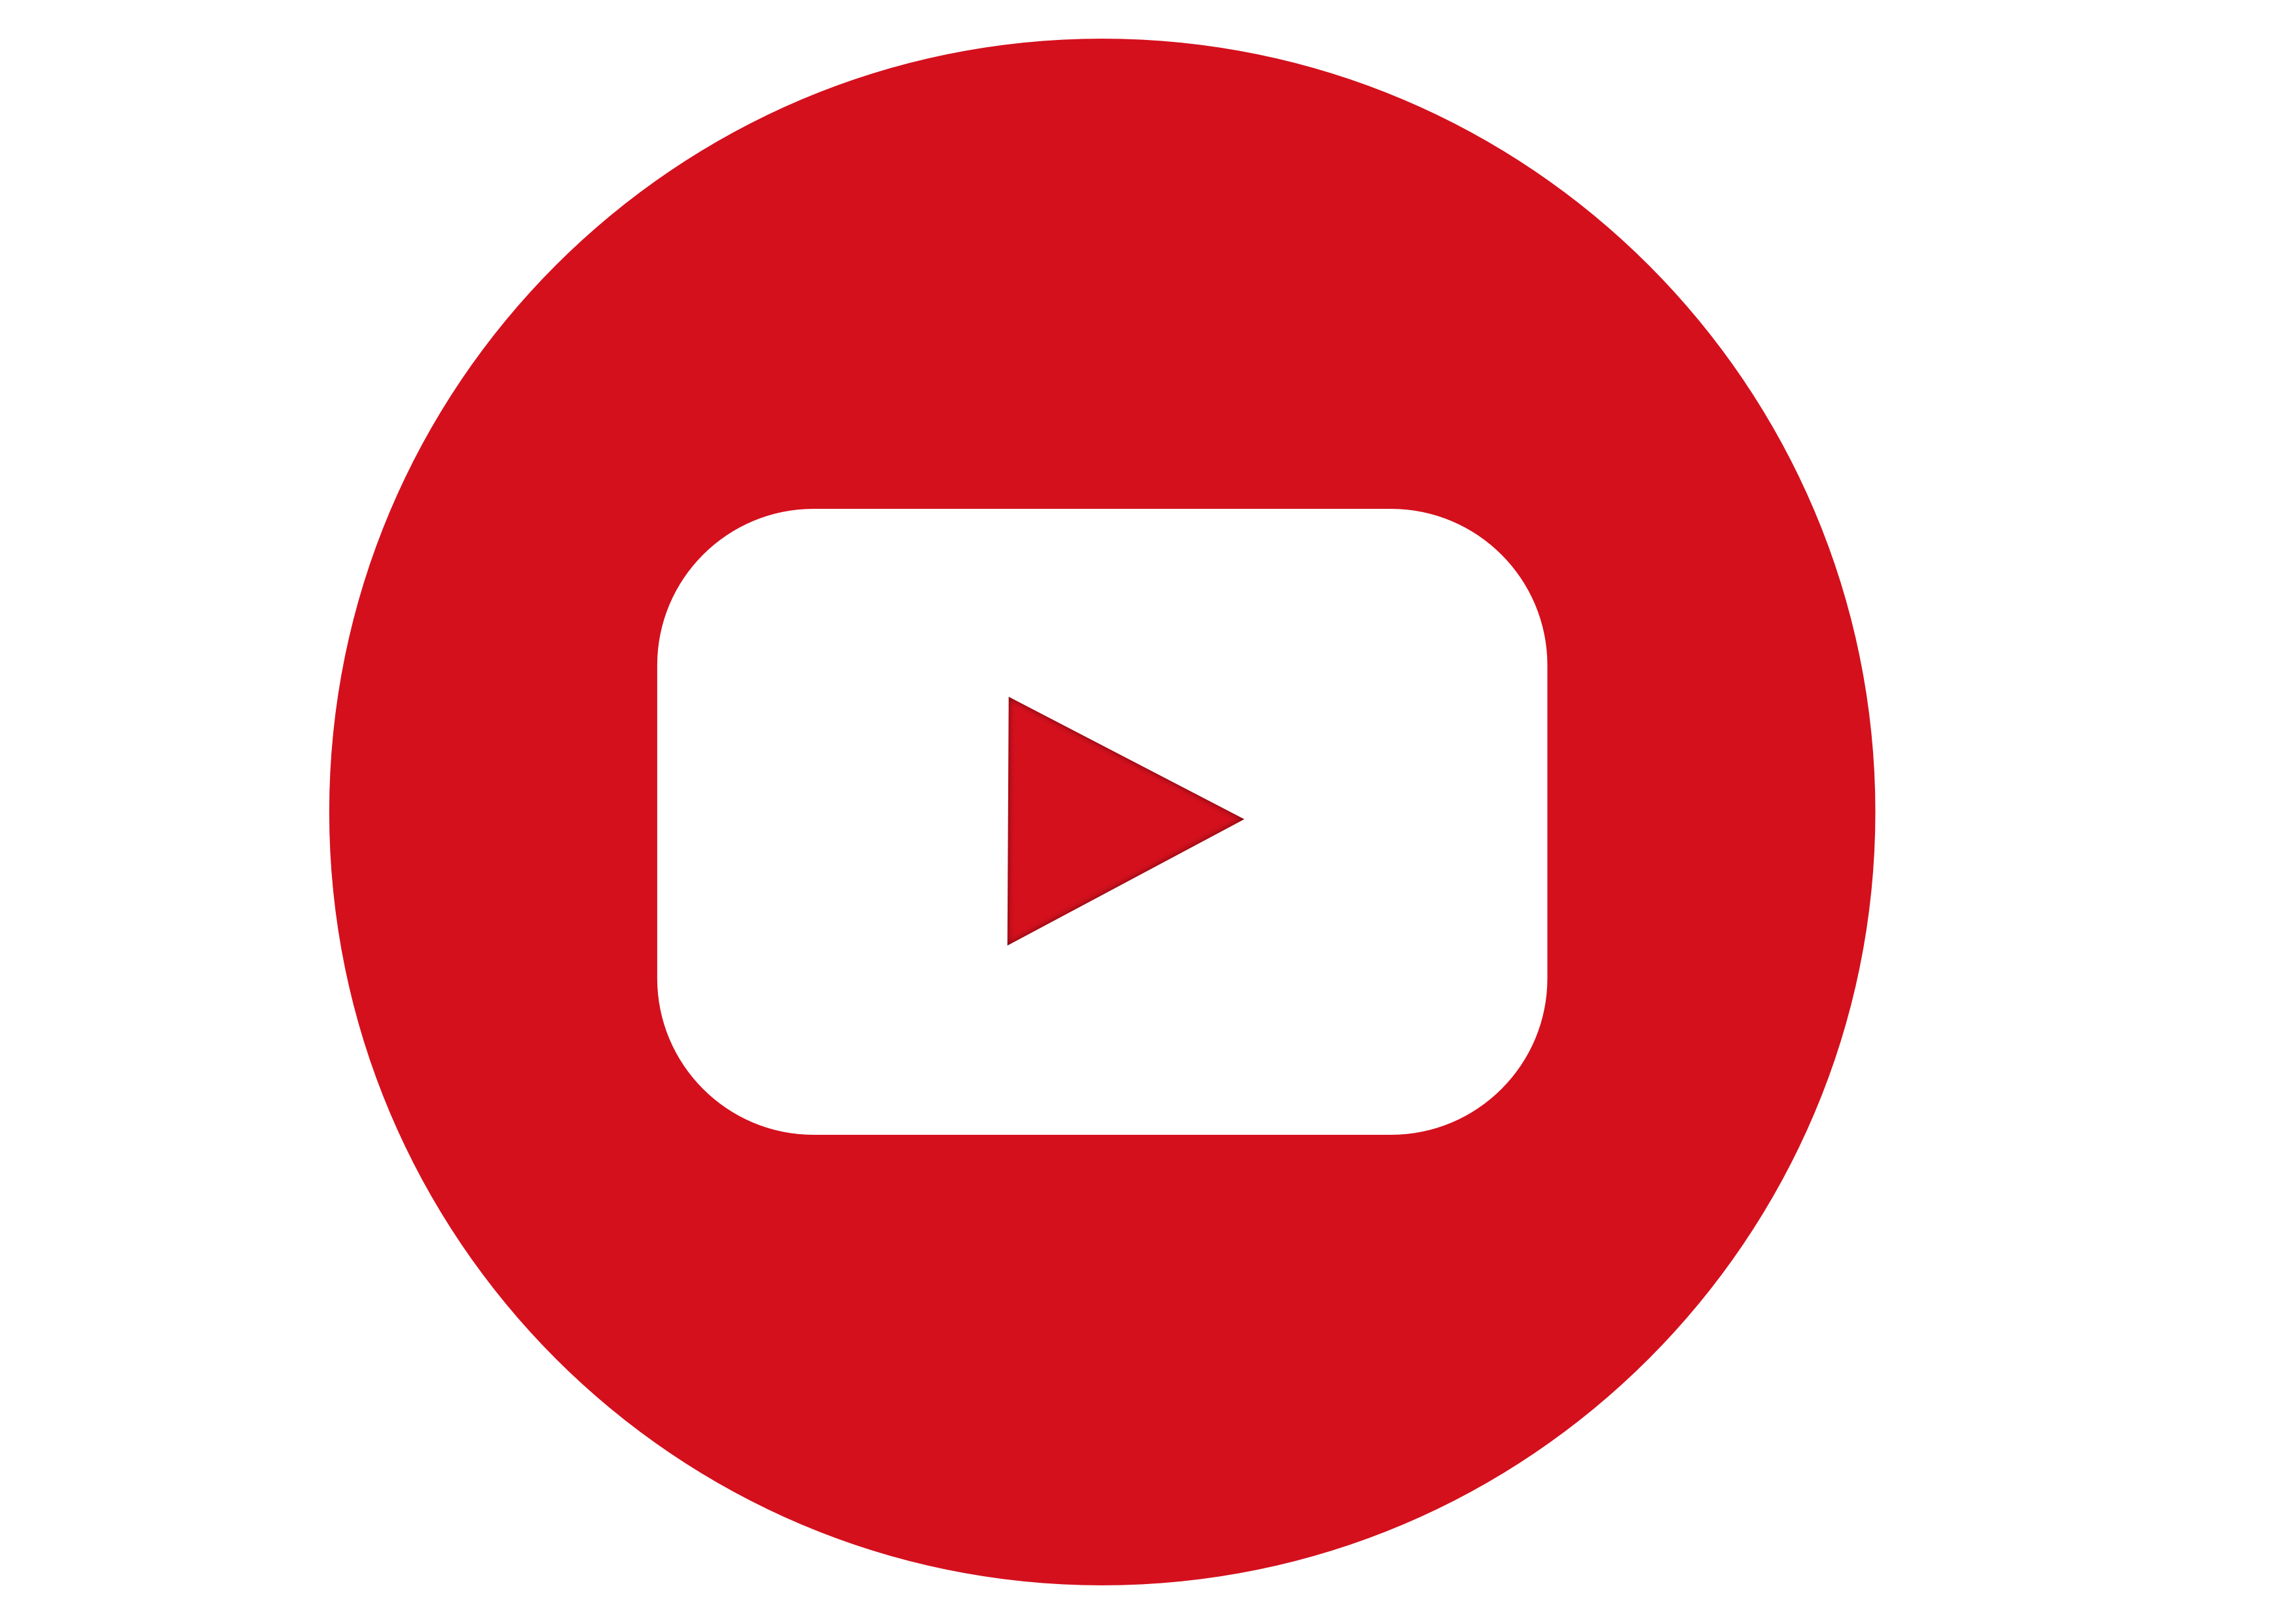 Ne официальная страница ютуб 3 класс. Ютуб лого. Значок ютуб PNG. Логотип youtube на белом фоне. Ютуб лого без фона.